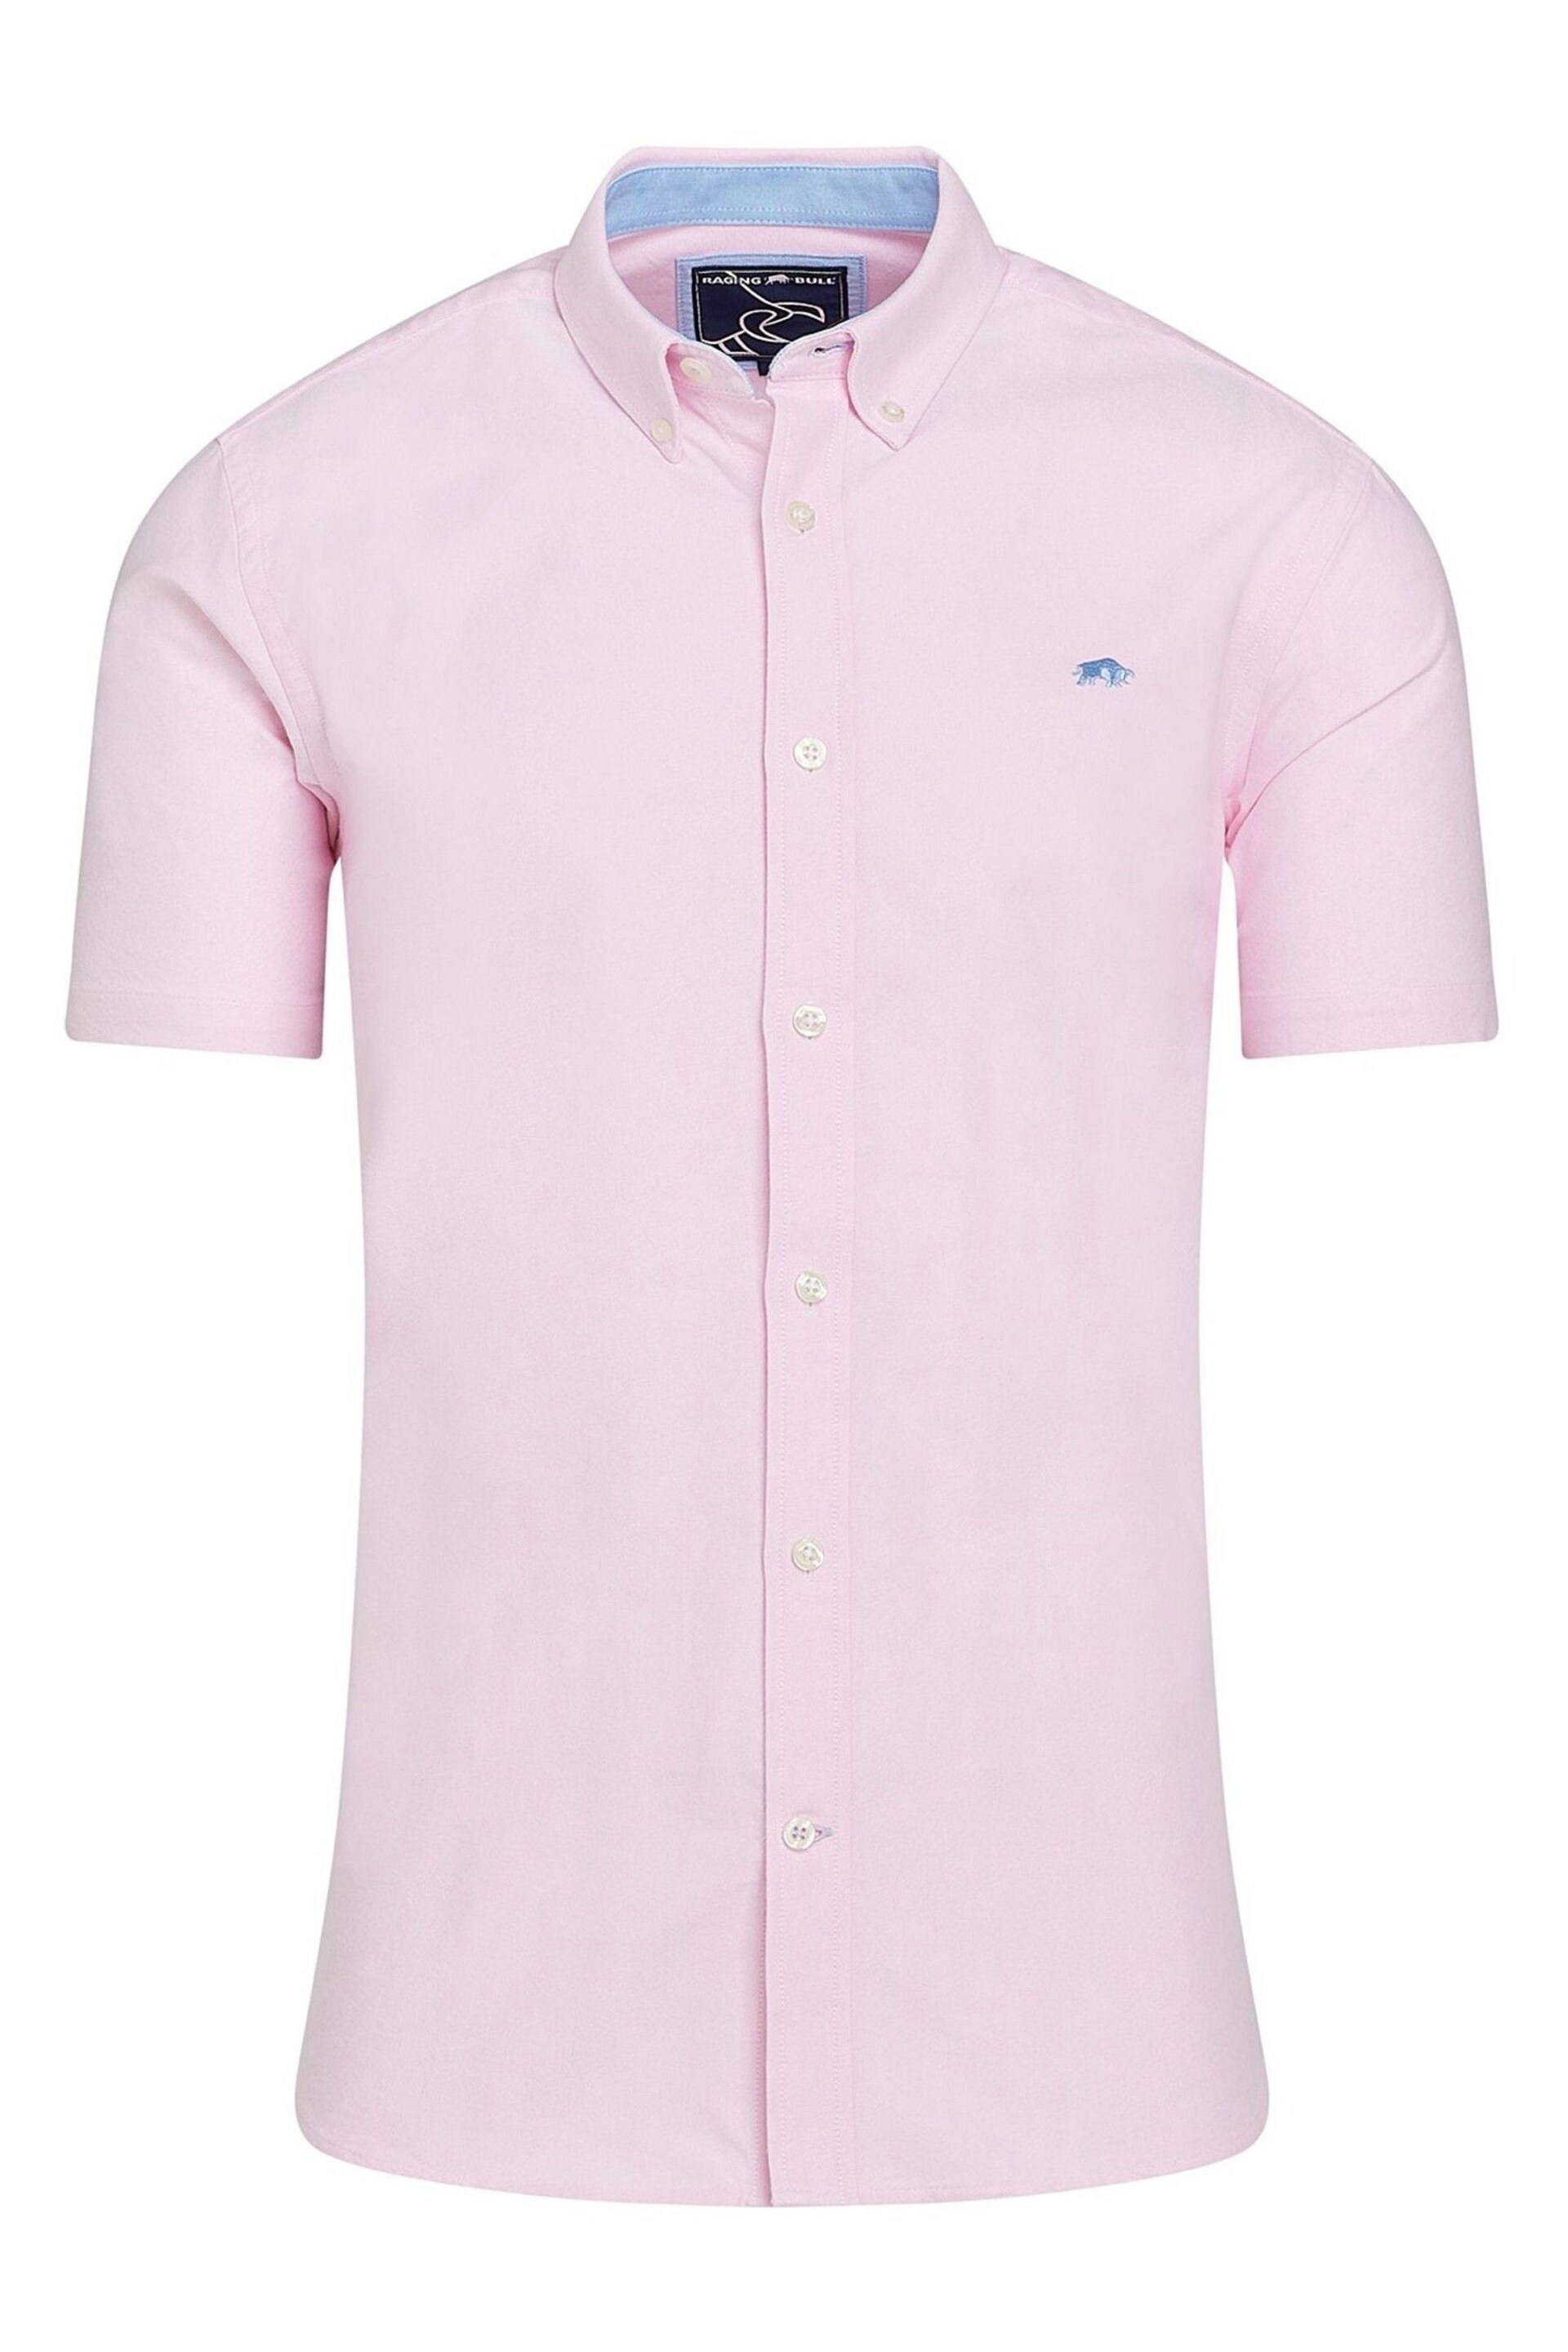 Raging Bull Pink Short Sleeve Lightweight Oxford Shirt - Image 6 of 7